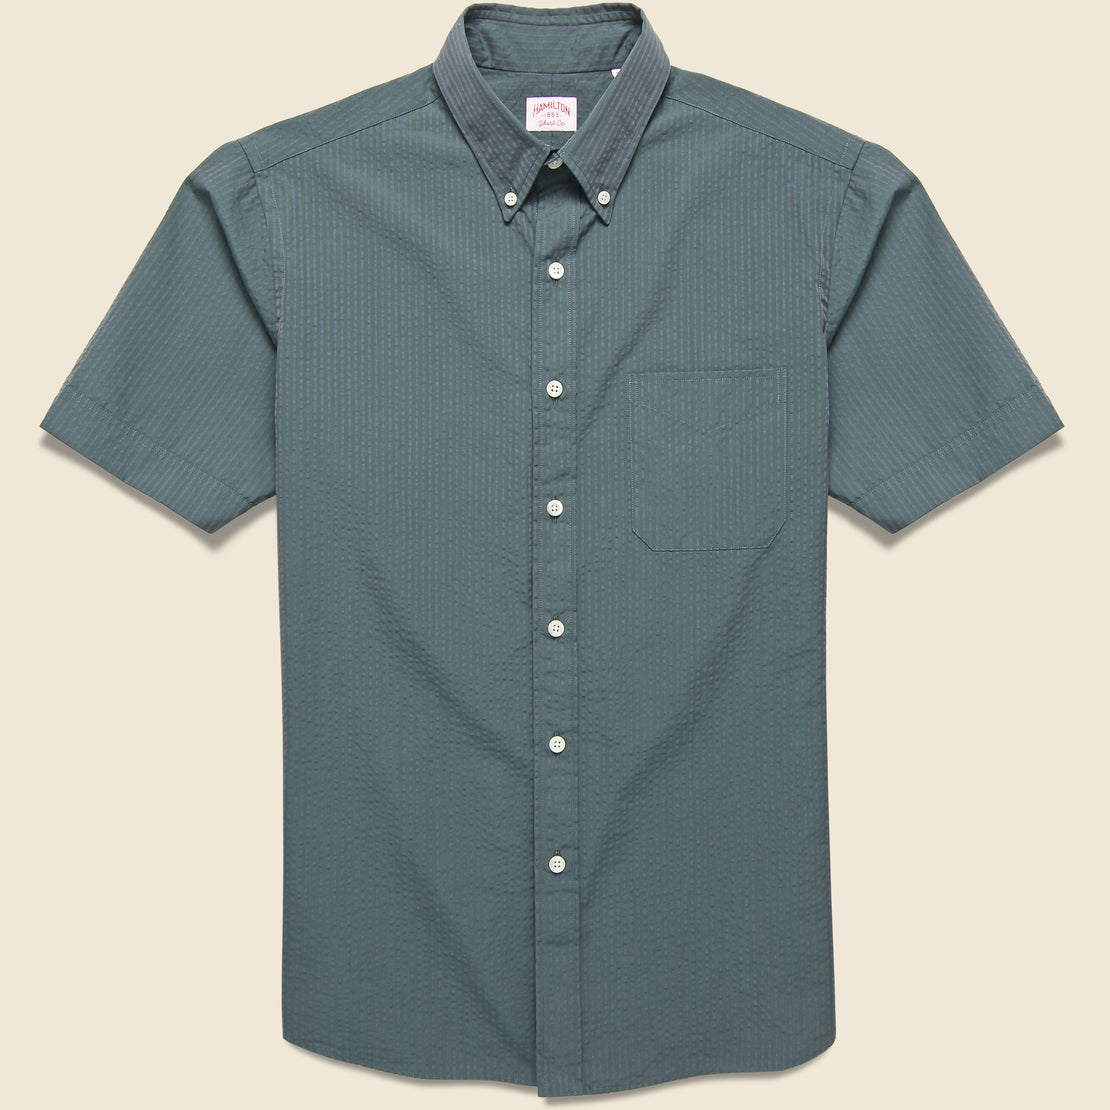 Hamilton Shirt Co. Striped Seersucker Shirt - Green/Grey